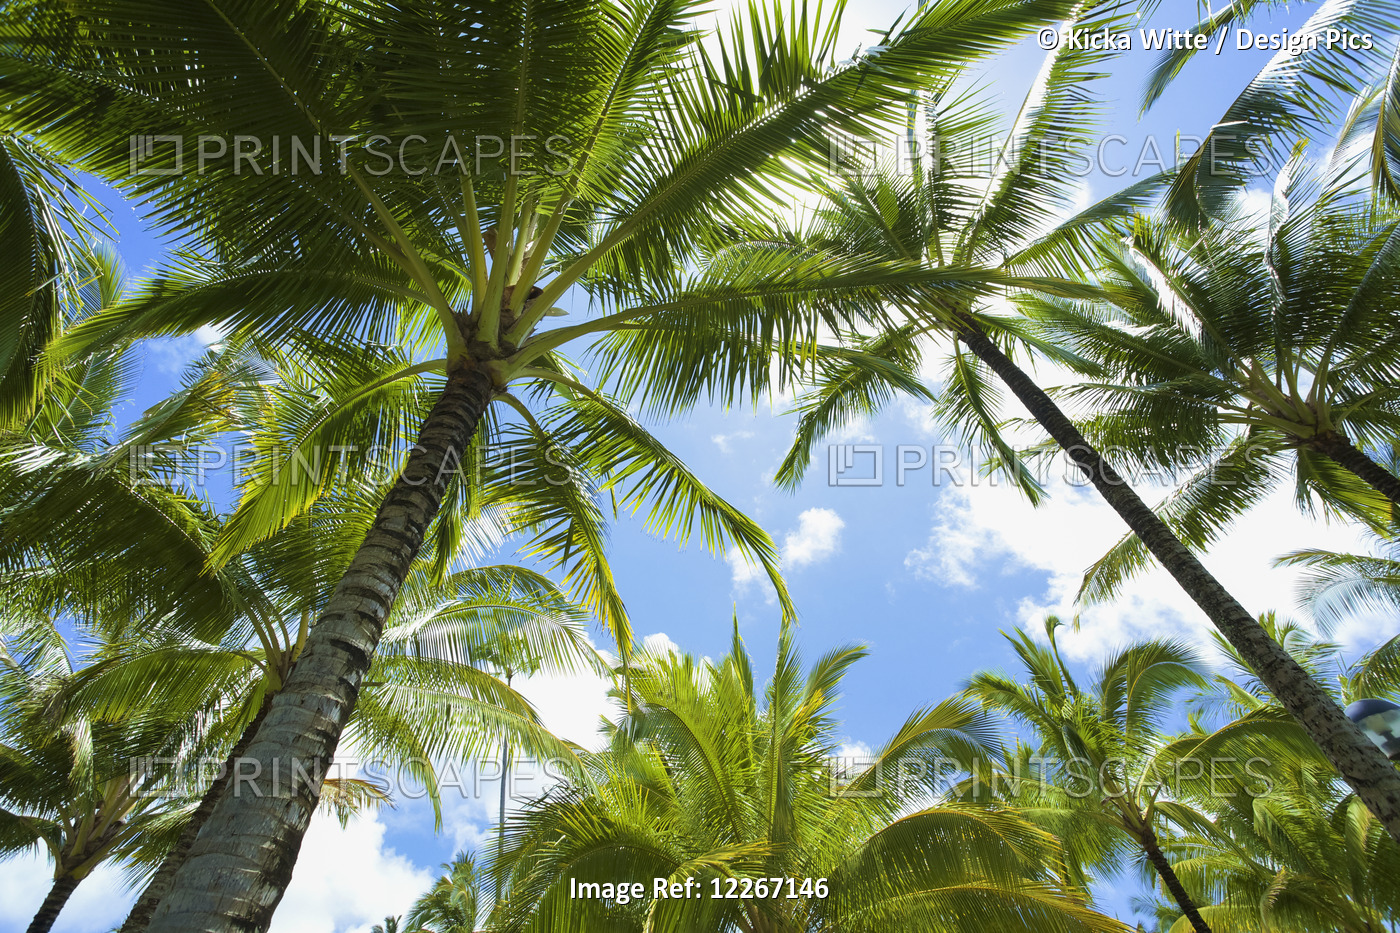 Palm Trees Against A Blue Sky With Clouds; Kauai, Hawaii, United States Of ...